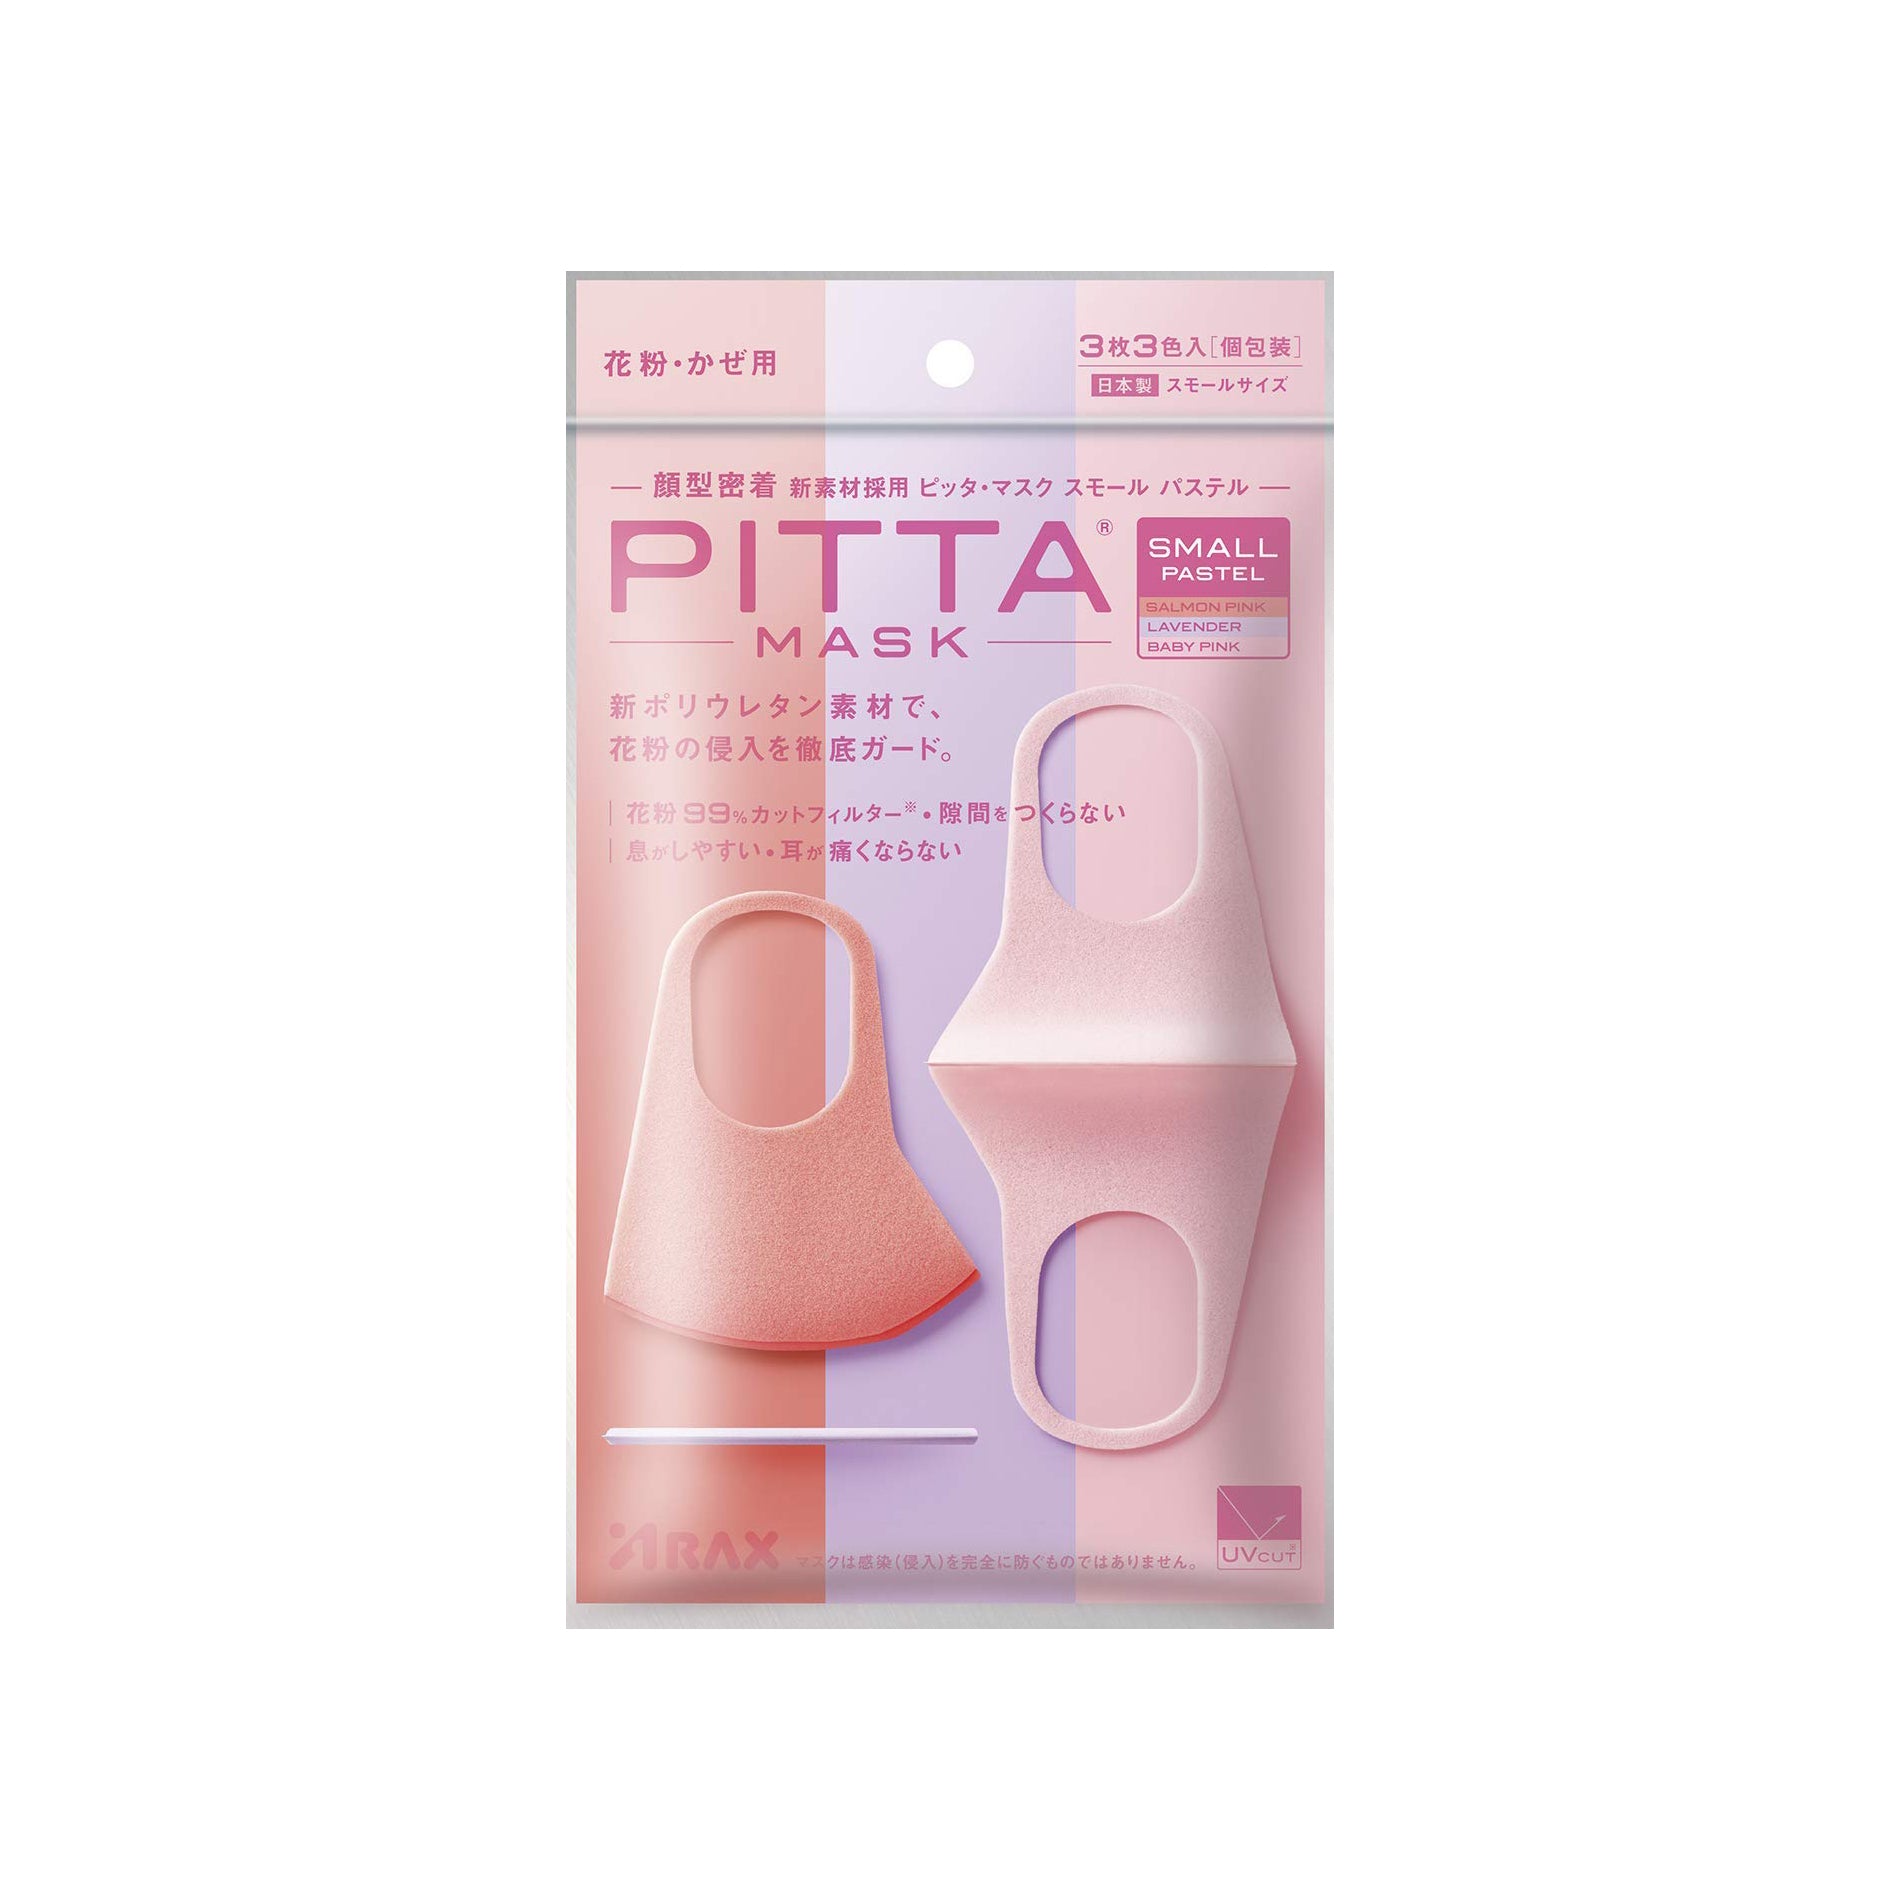 ARAX Pitta Face Mask Small Pink Lifestyle Arax   